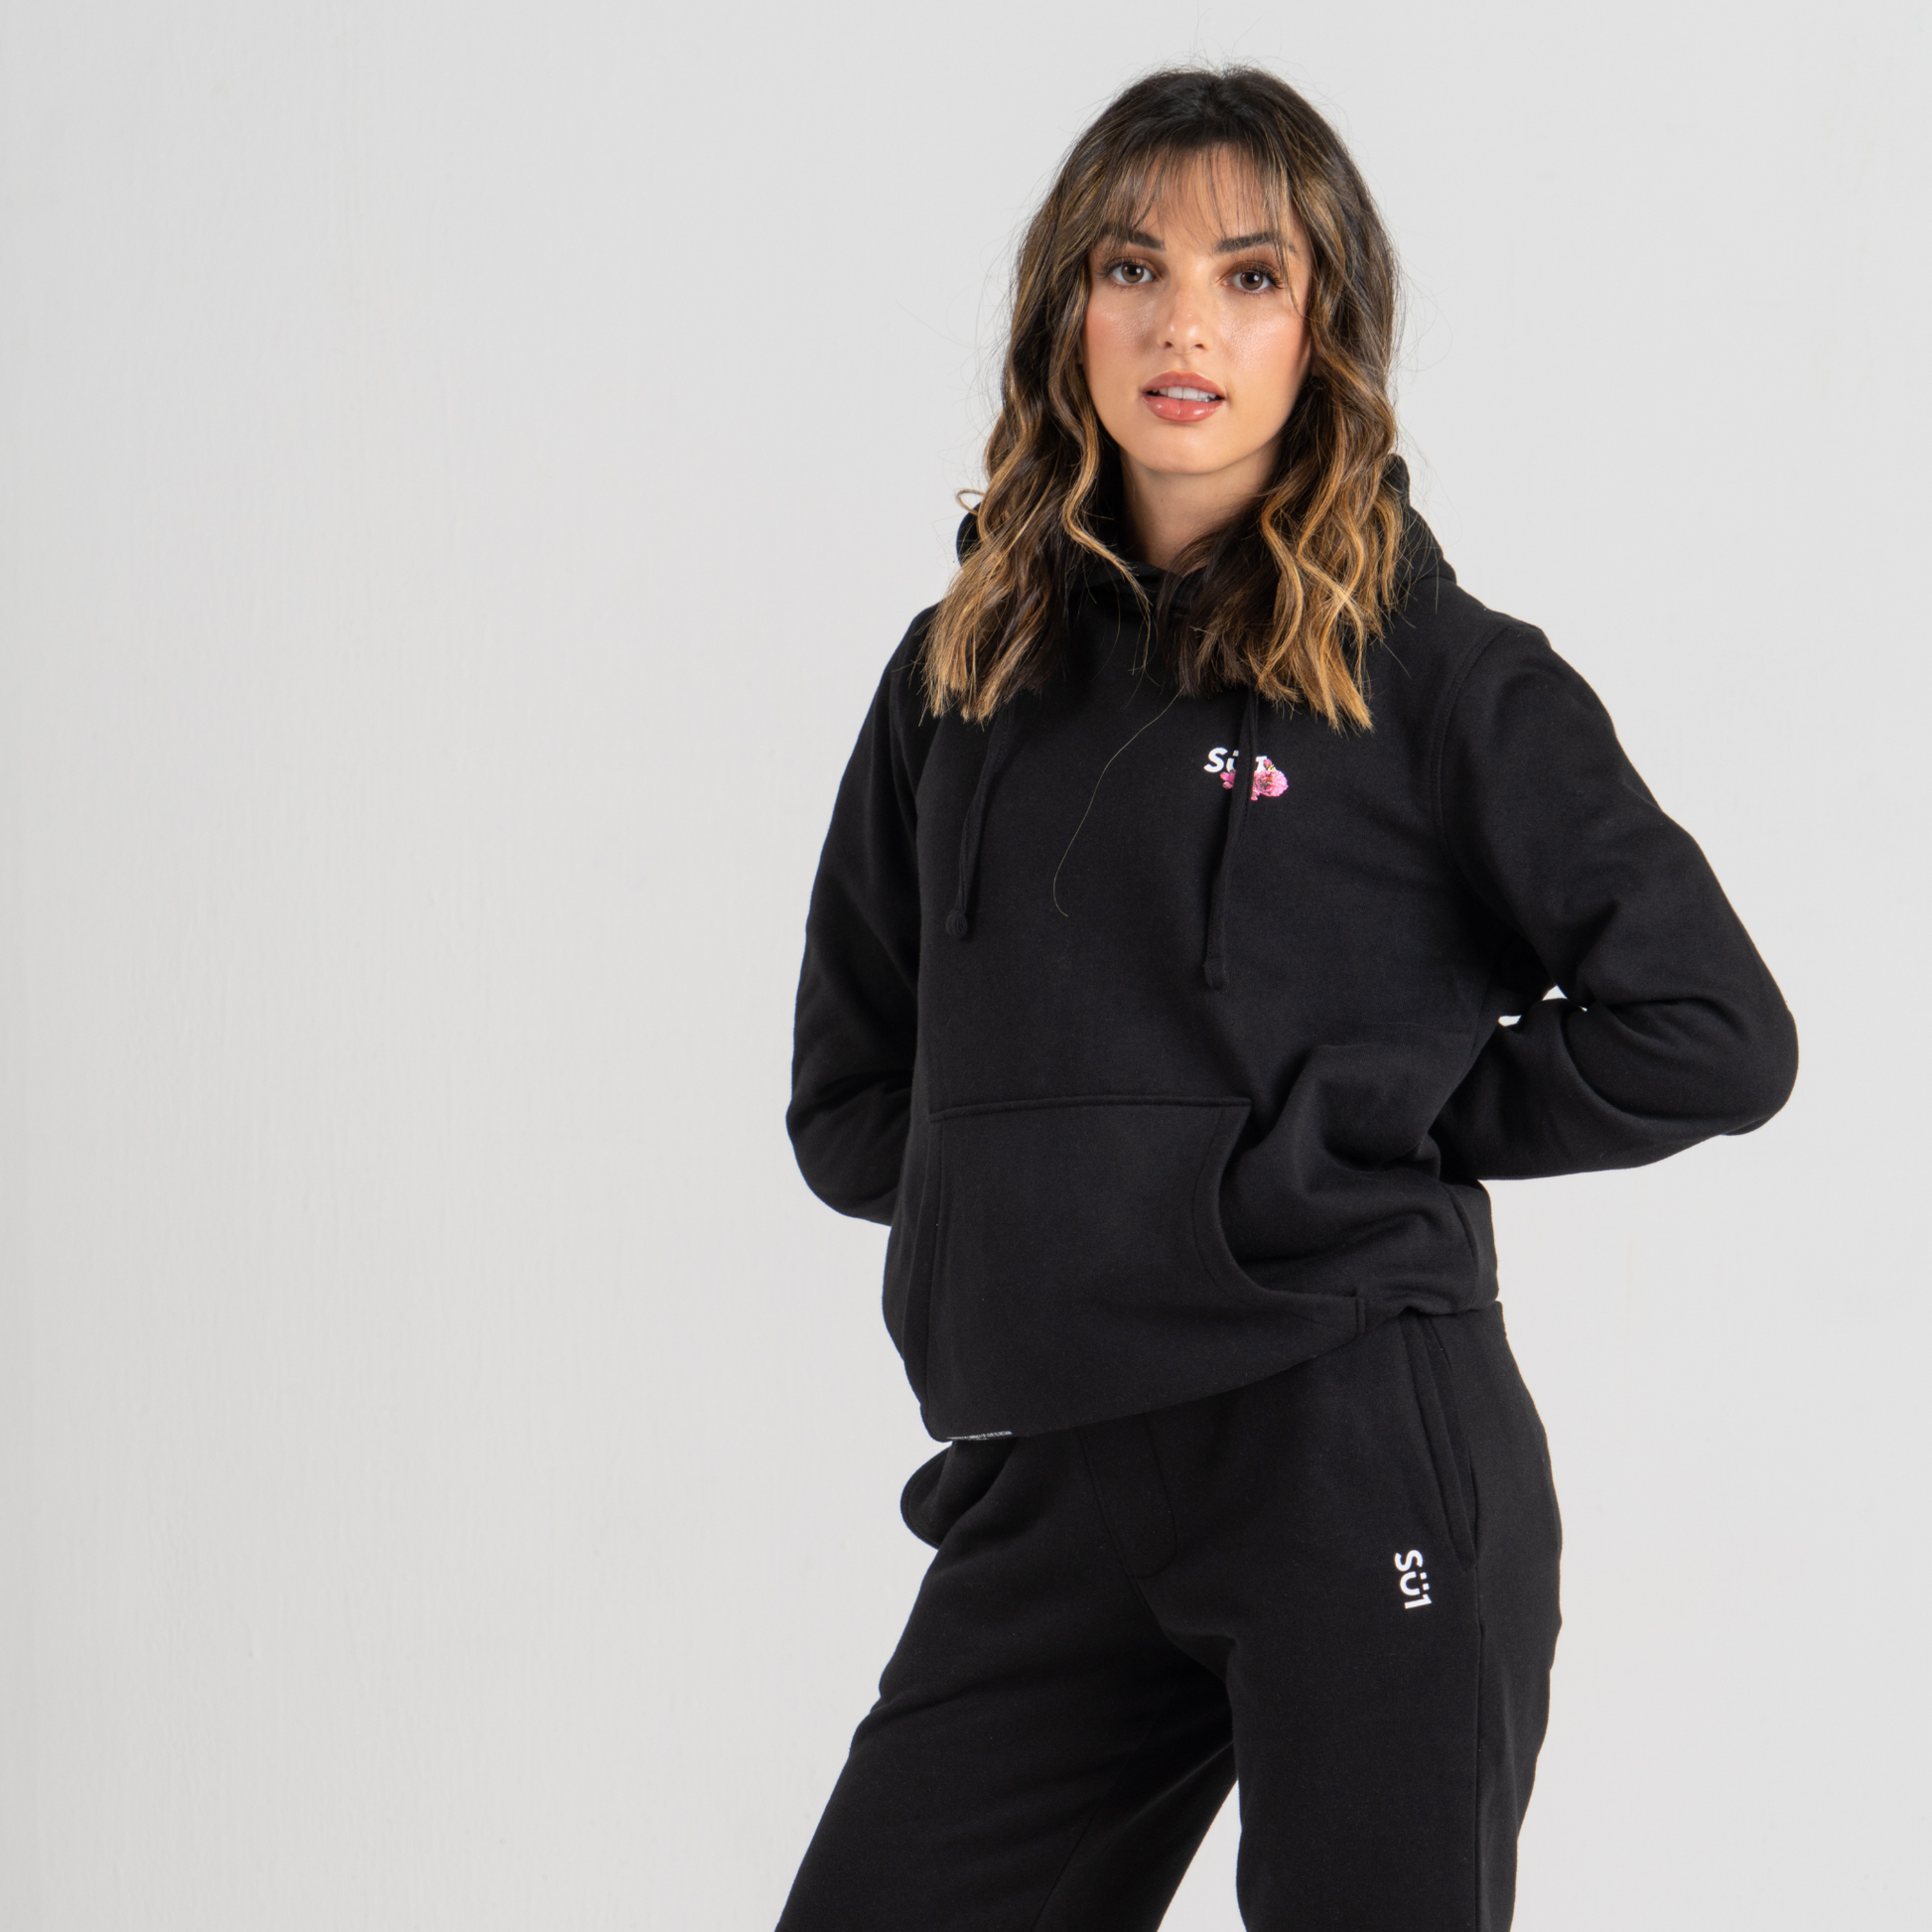 Woman wearing black hoodie SU1 brand clothing and black sport trousers